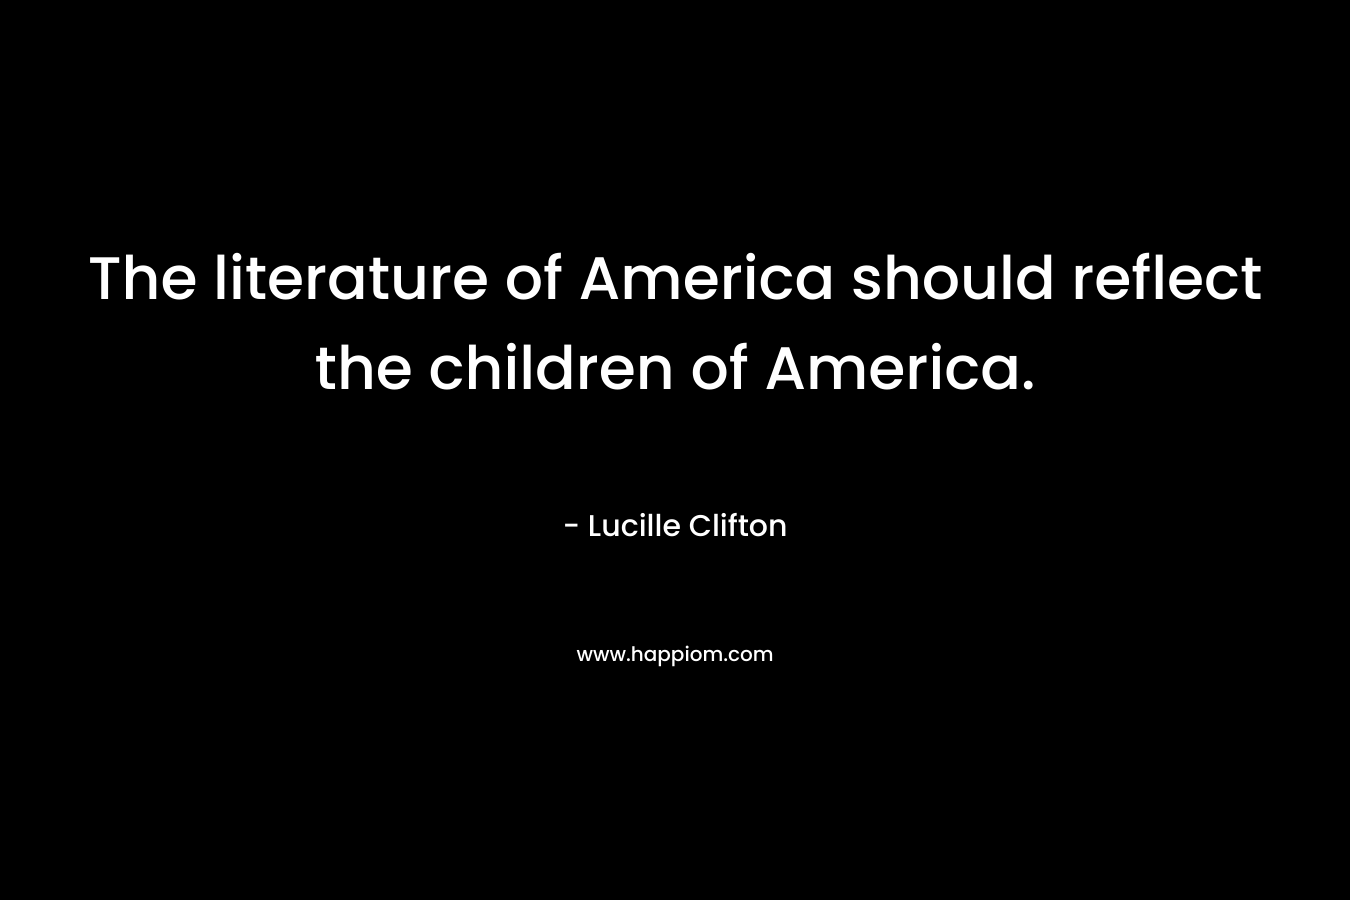 The literature of America should reflect the children of America.